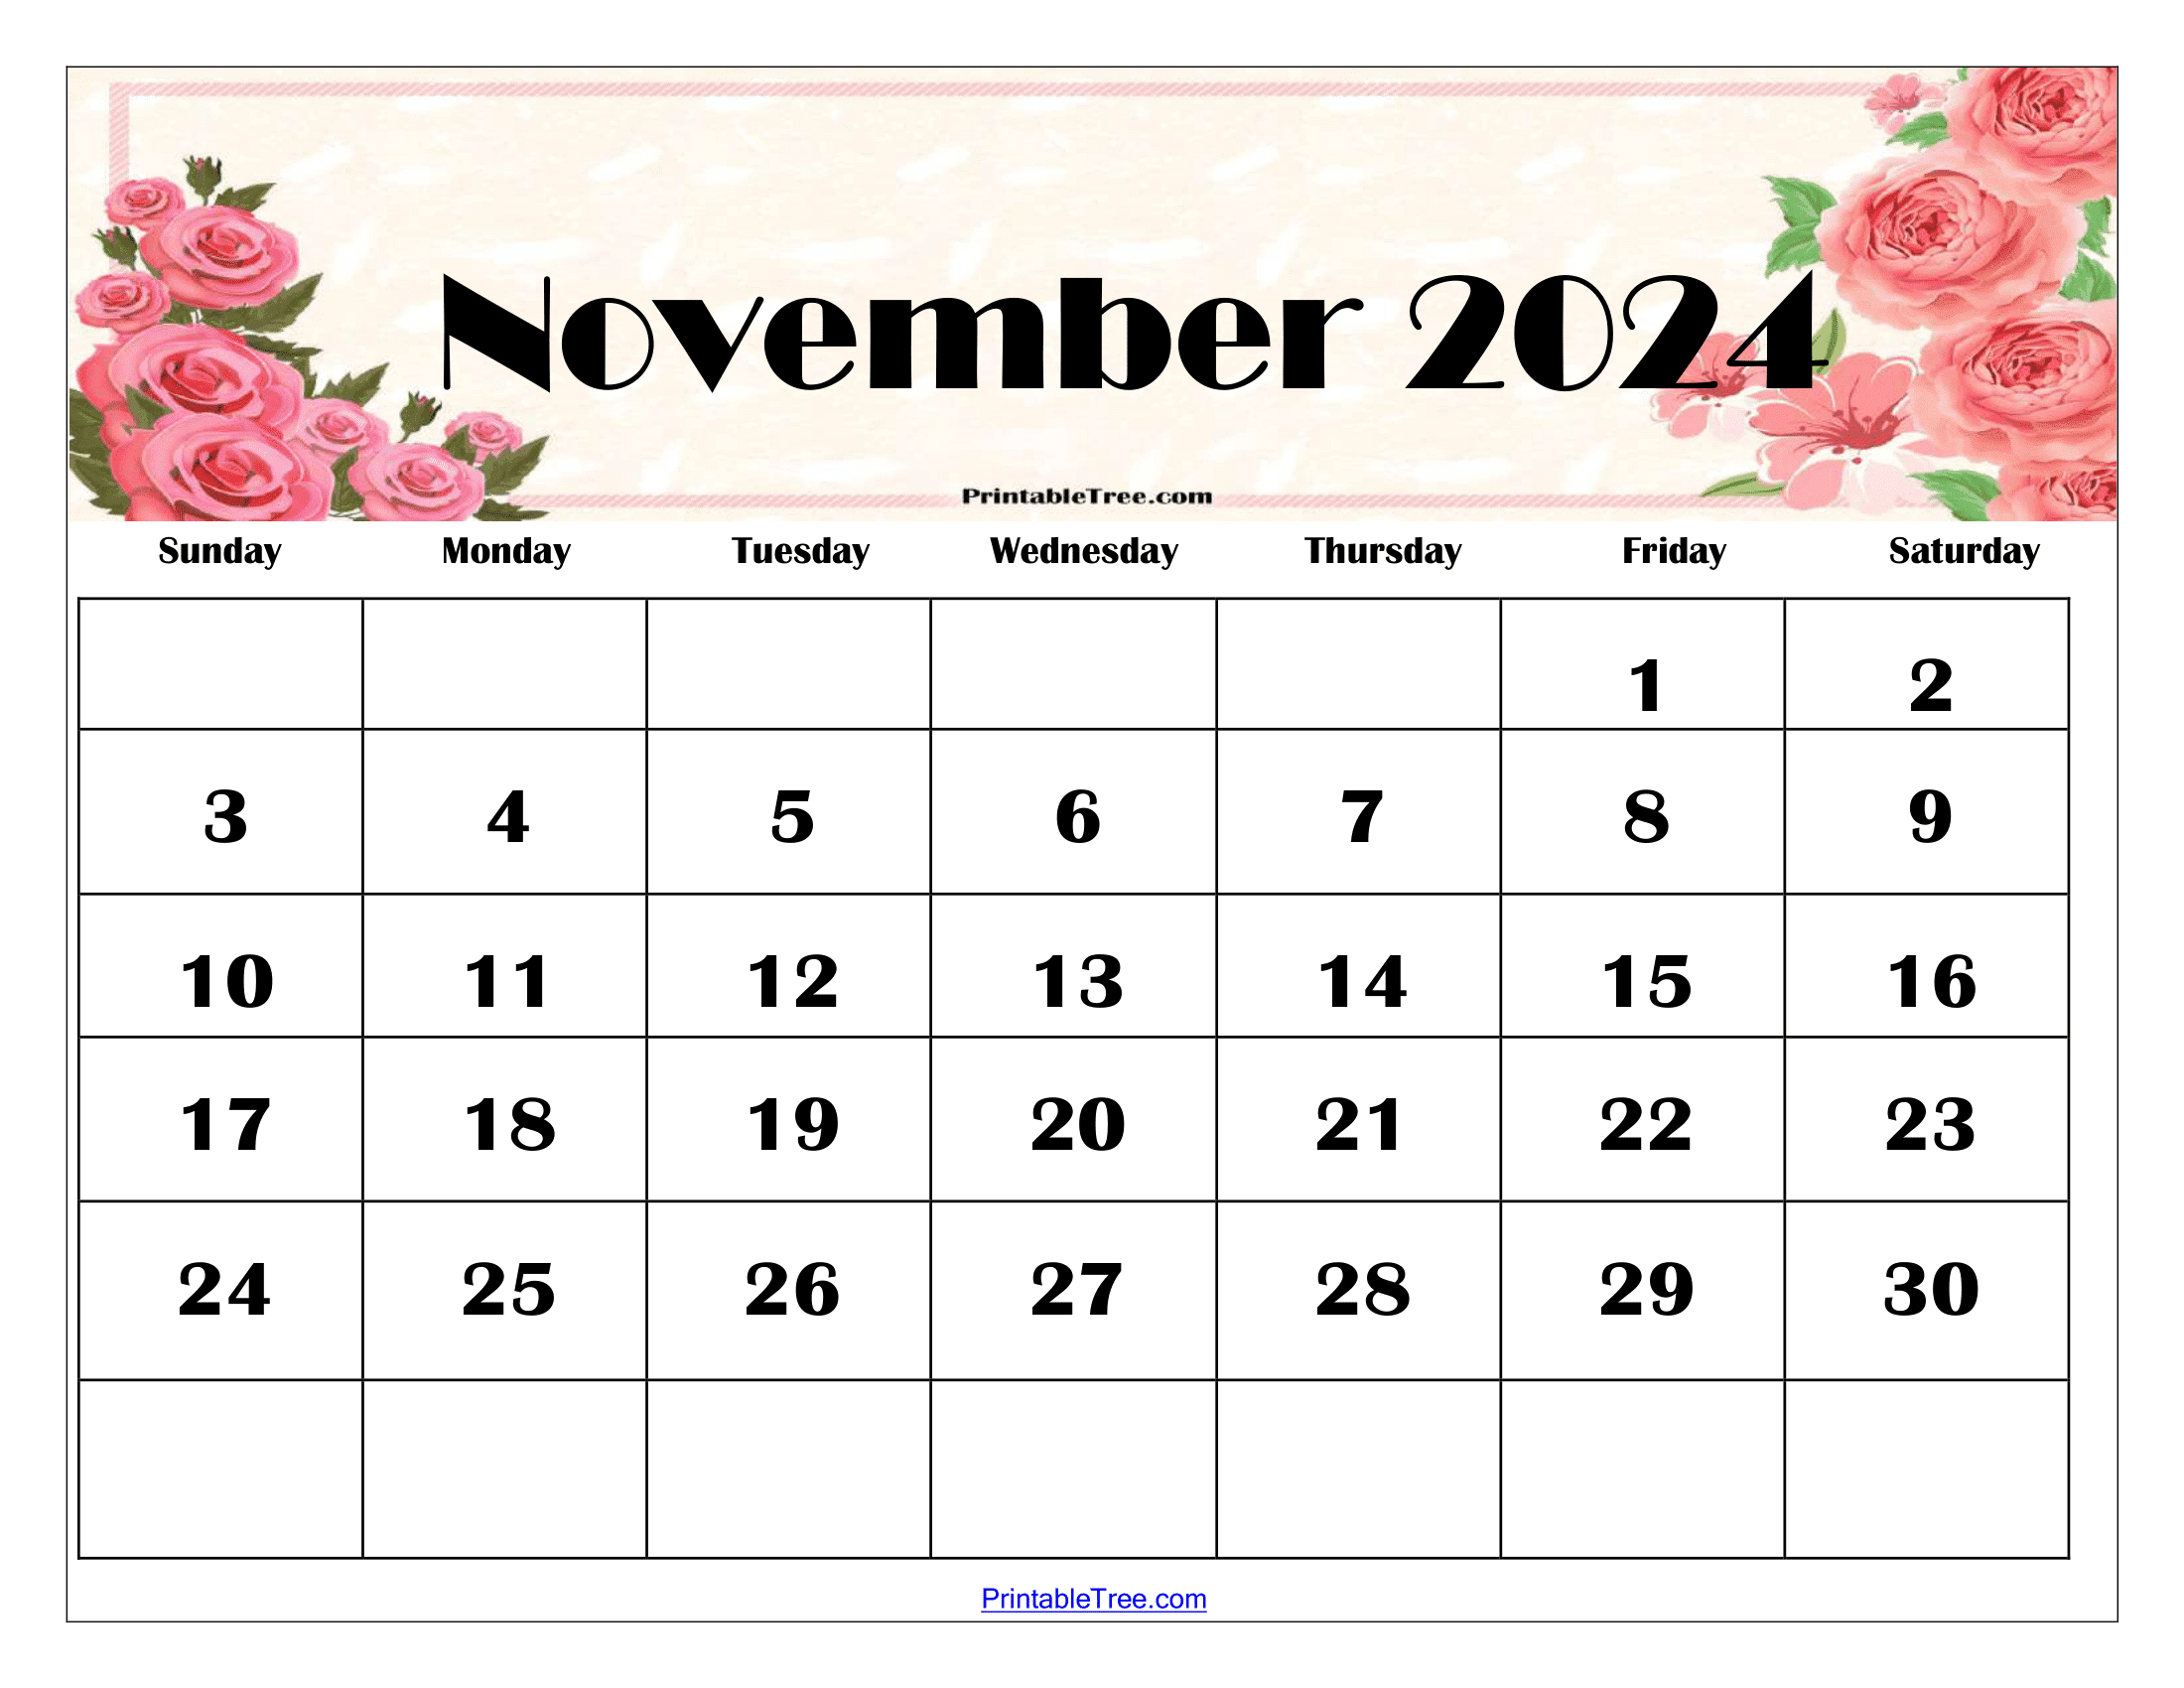 November 2024 Calendar Printable Pdf Template With Holidays throughout Free Printable Calendar 2024 November December